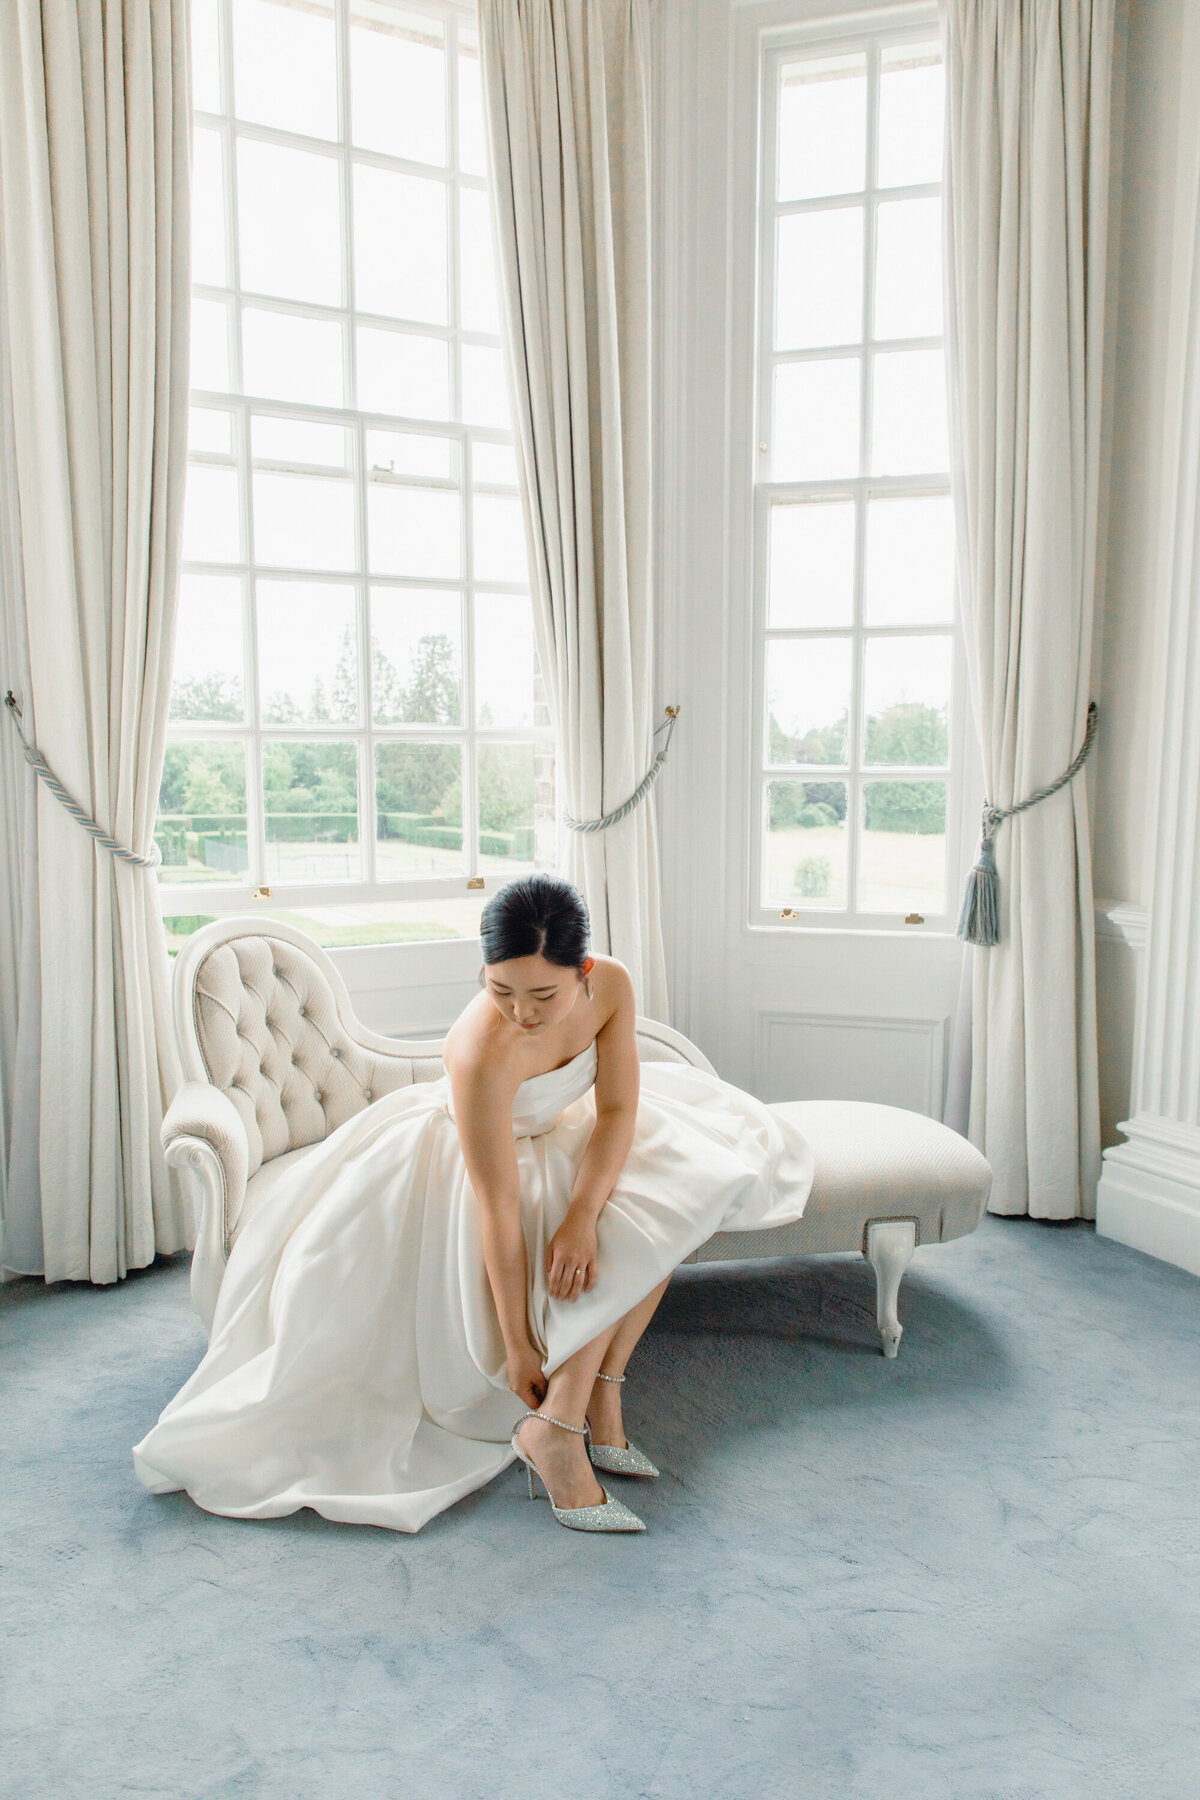 Hedsor-House-Editorial-Wedding-Photographer-Colette-Aurelia-15